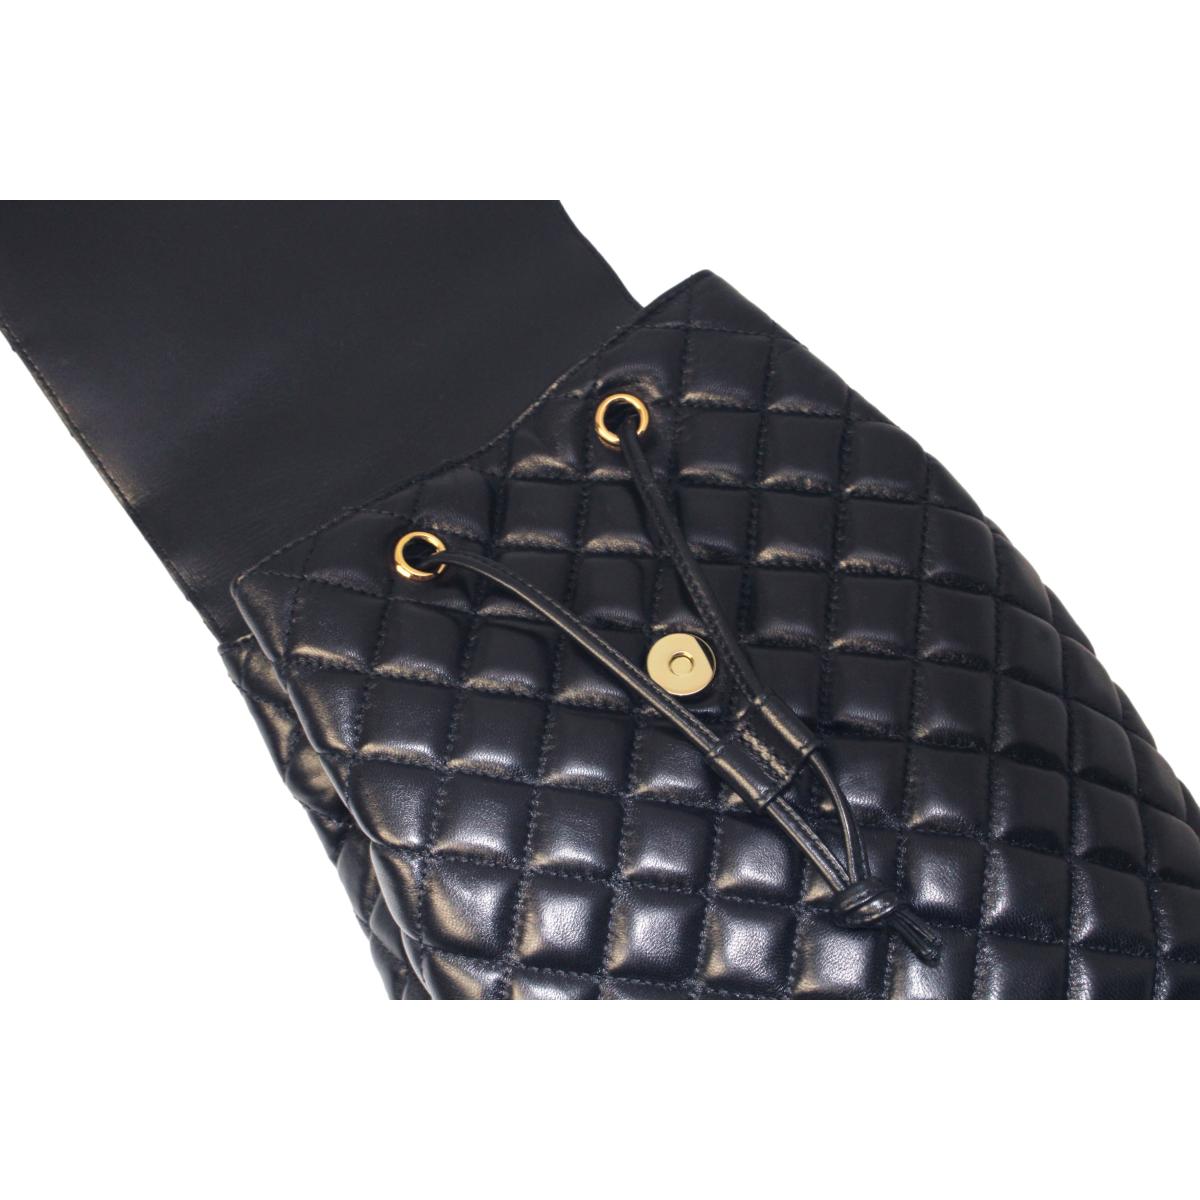 Versace Black Leather Medusa Quilted Flap Backpack DBFI160S - LUXURYMRKT